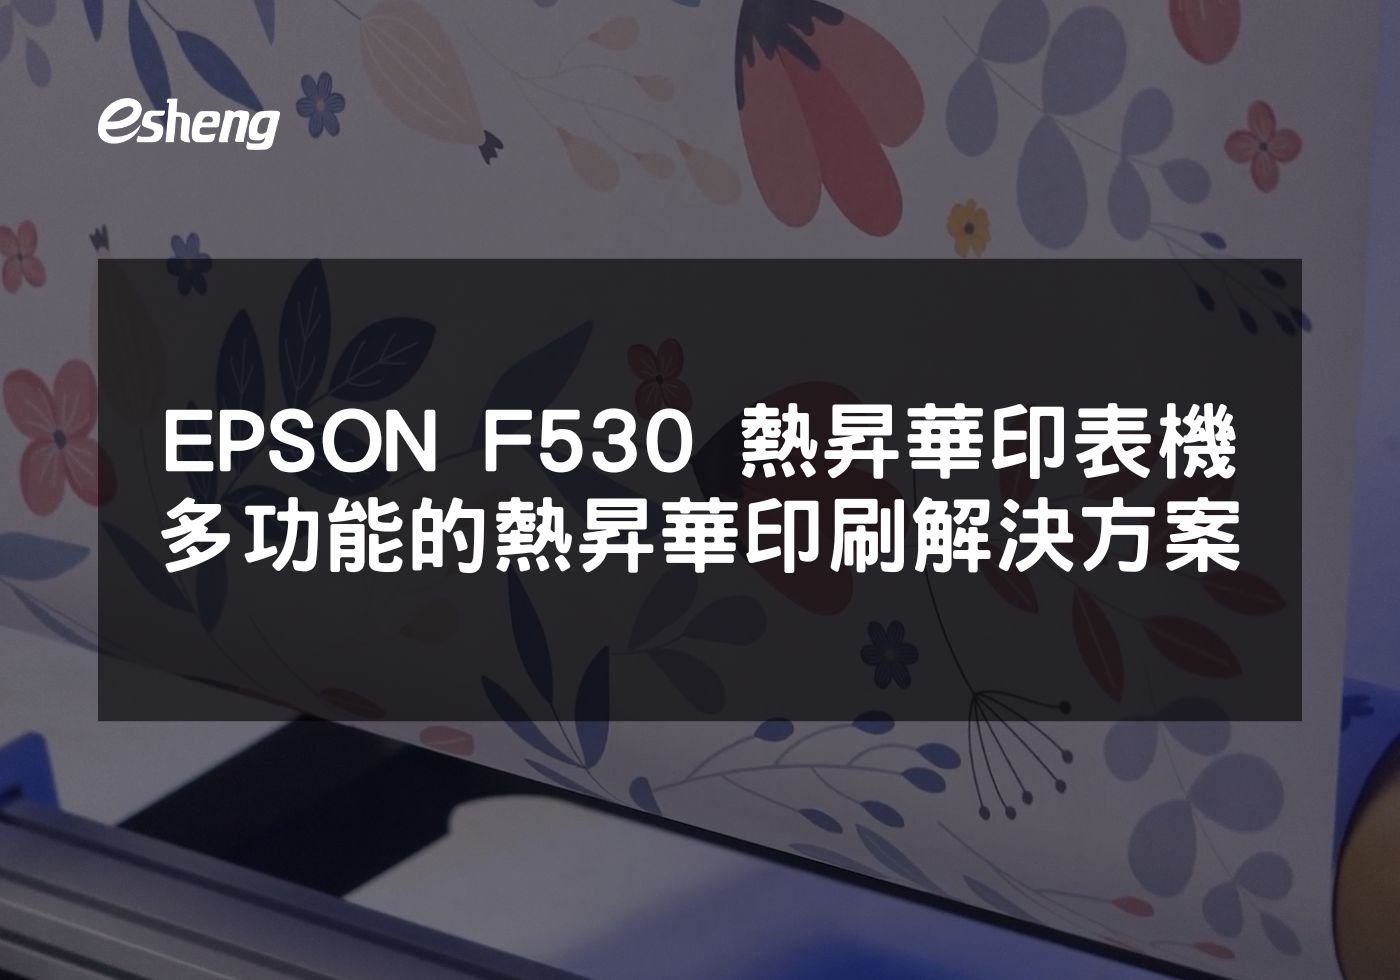 EPSON F530 熱昇華印表機 高效多功能的熱昇華印刷解決方案